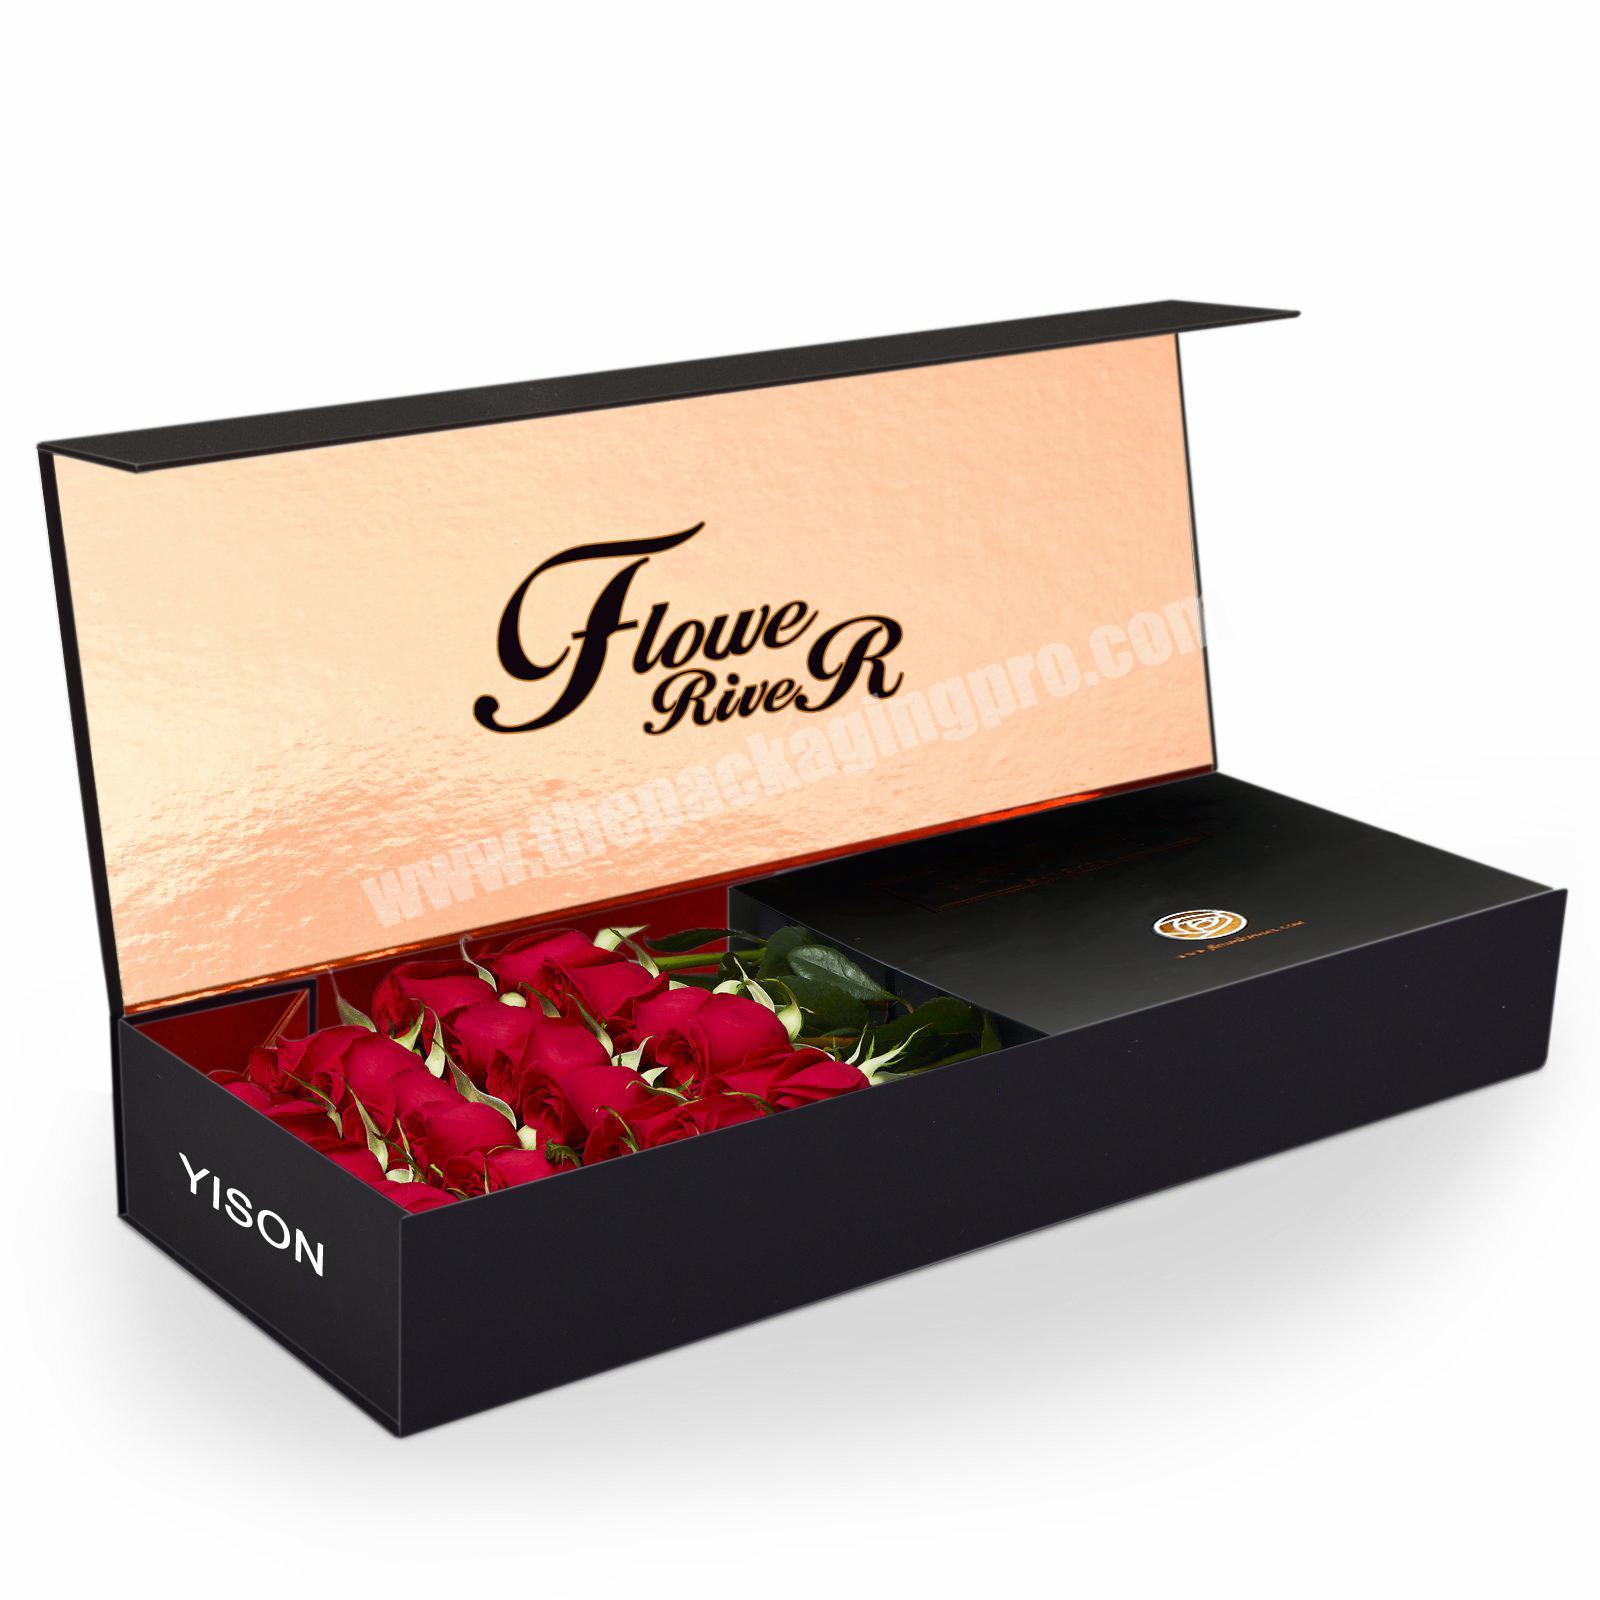 Wholesale Luxury Rigid boite a fleur FLower Packaging Boxes For Flowers Packaging